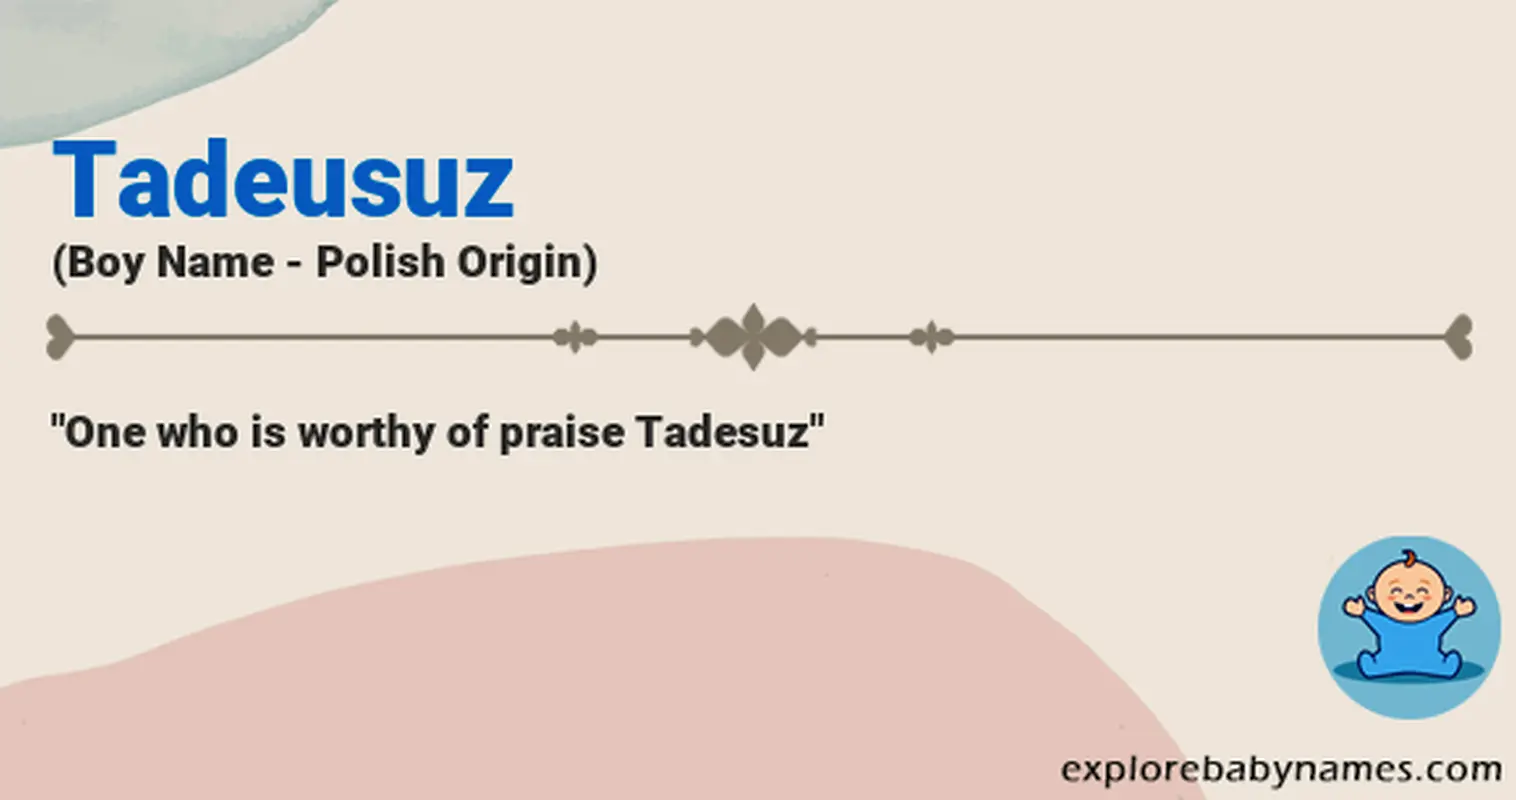 Meaning of Tadeusuz